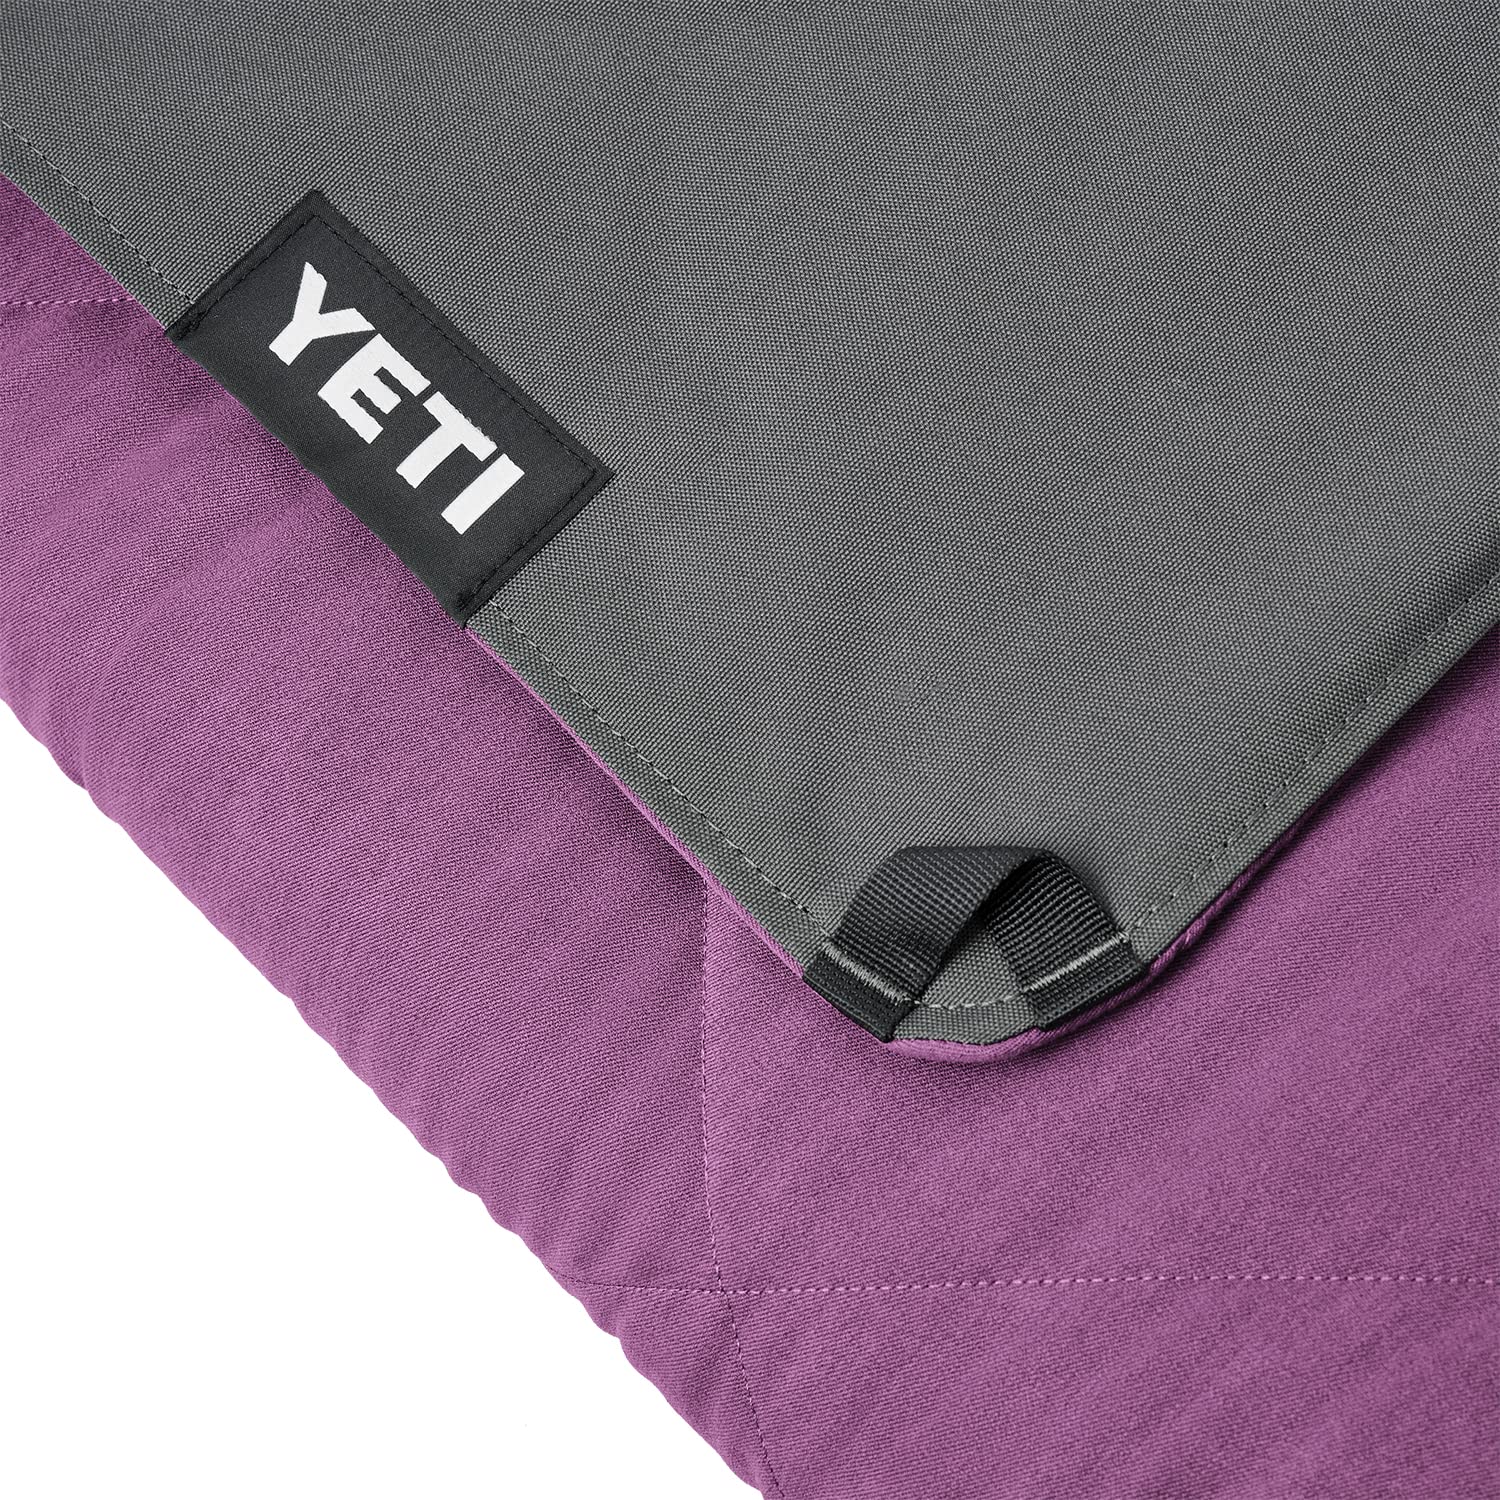 YETI Lowlands Blanket, Multi-Use Blanket with Travel Bag, Nordic Purple